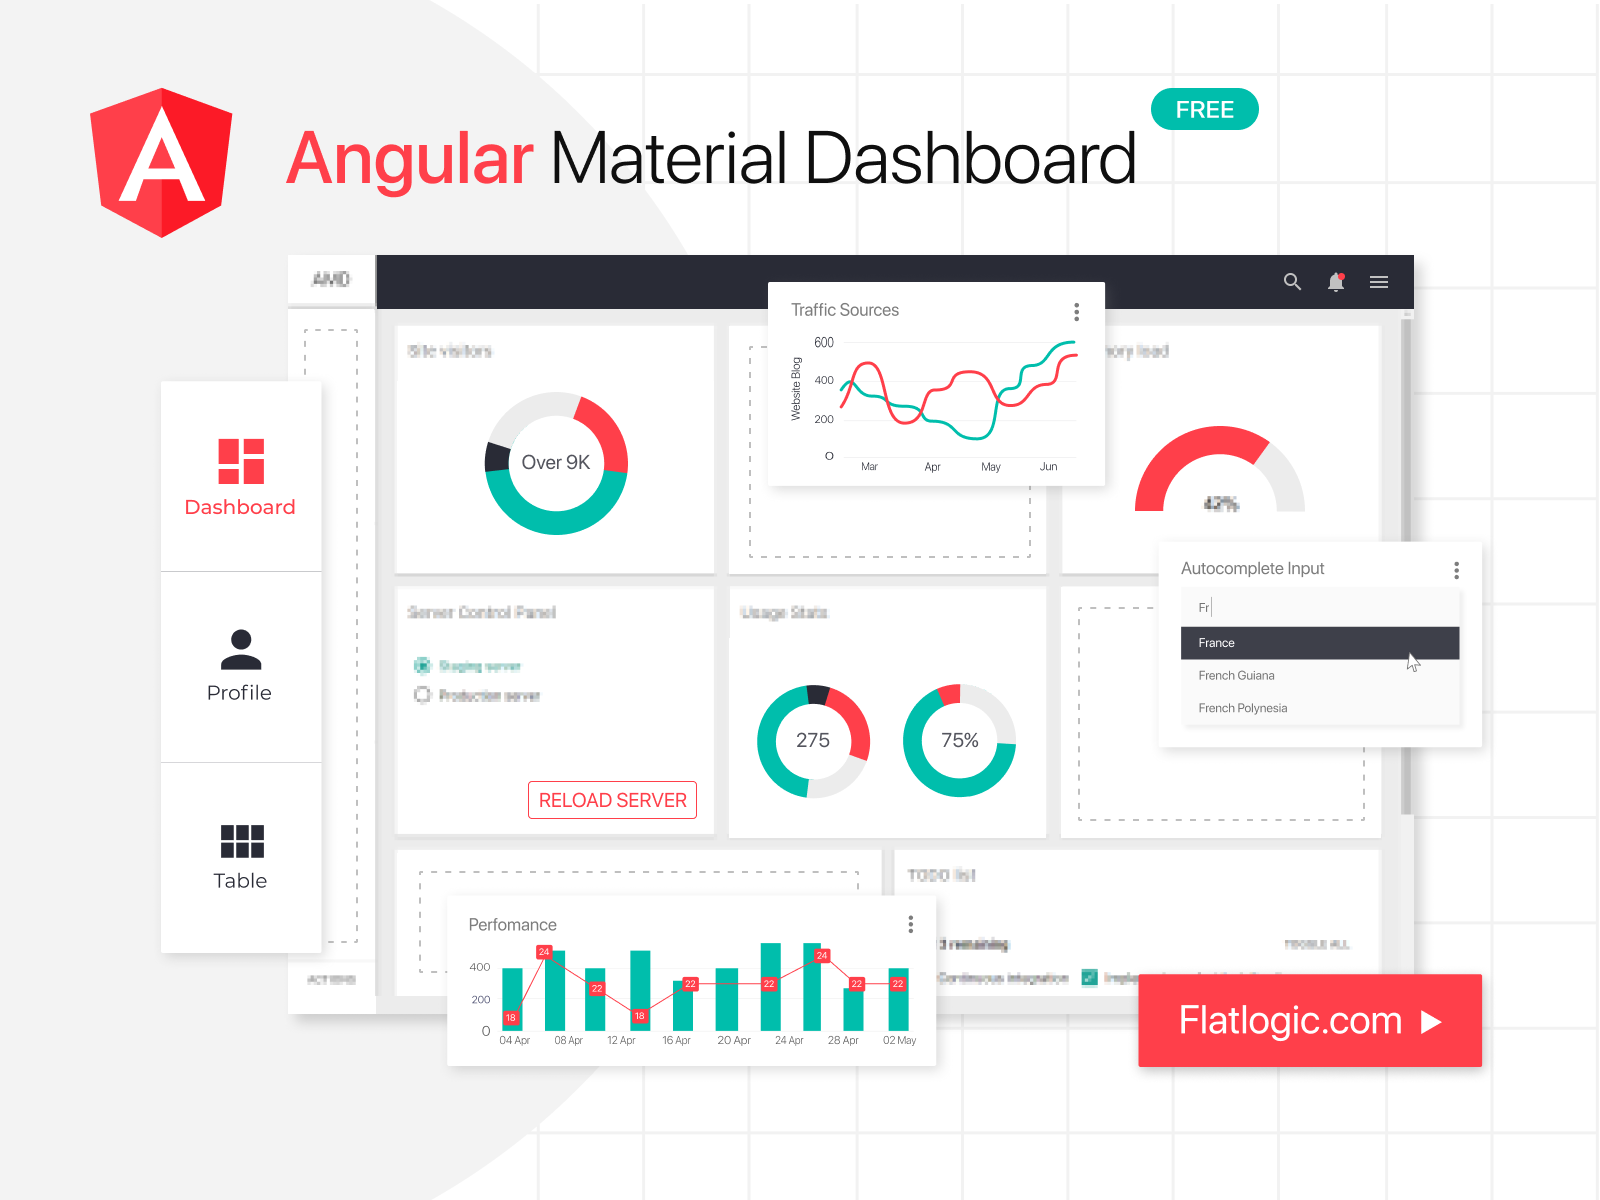 Angular Material Dashboard by Flatlogic on Dribbble